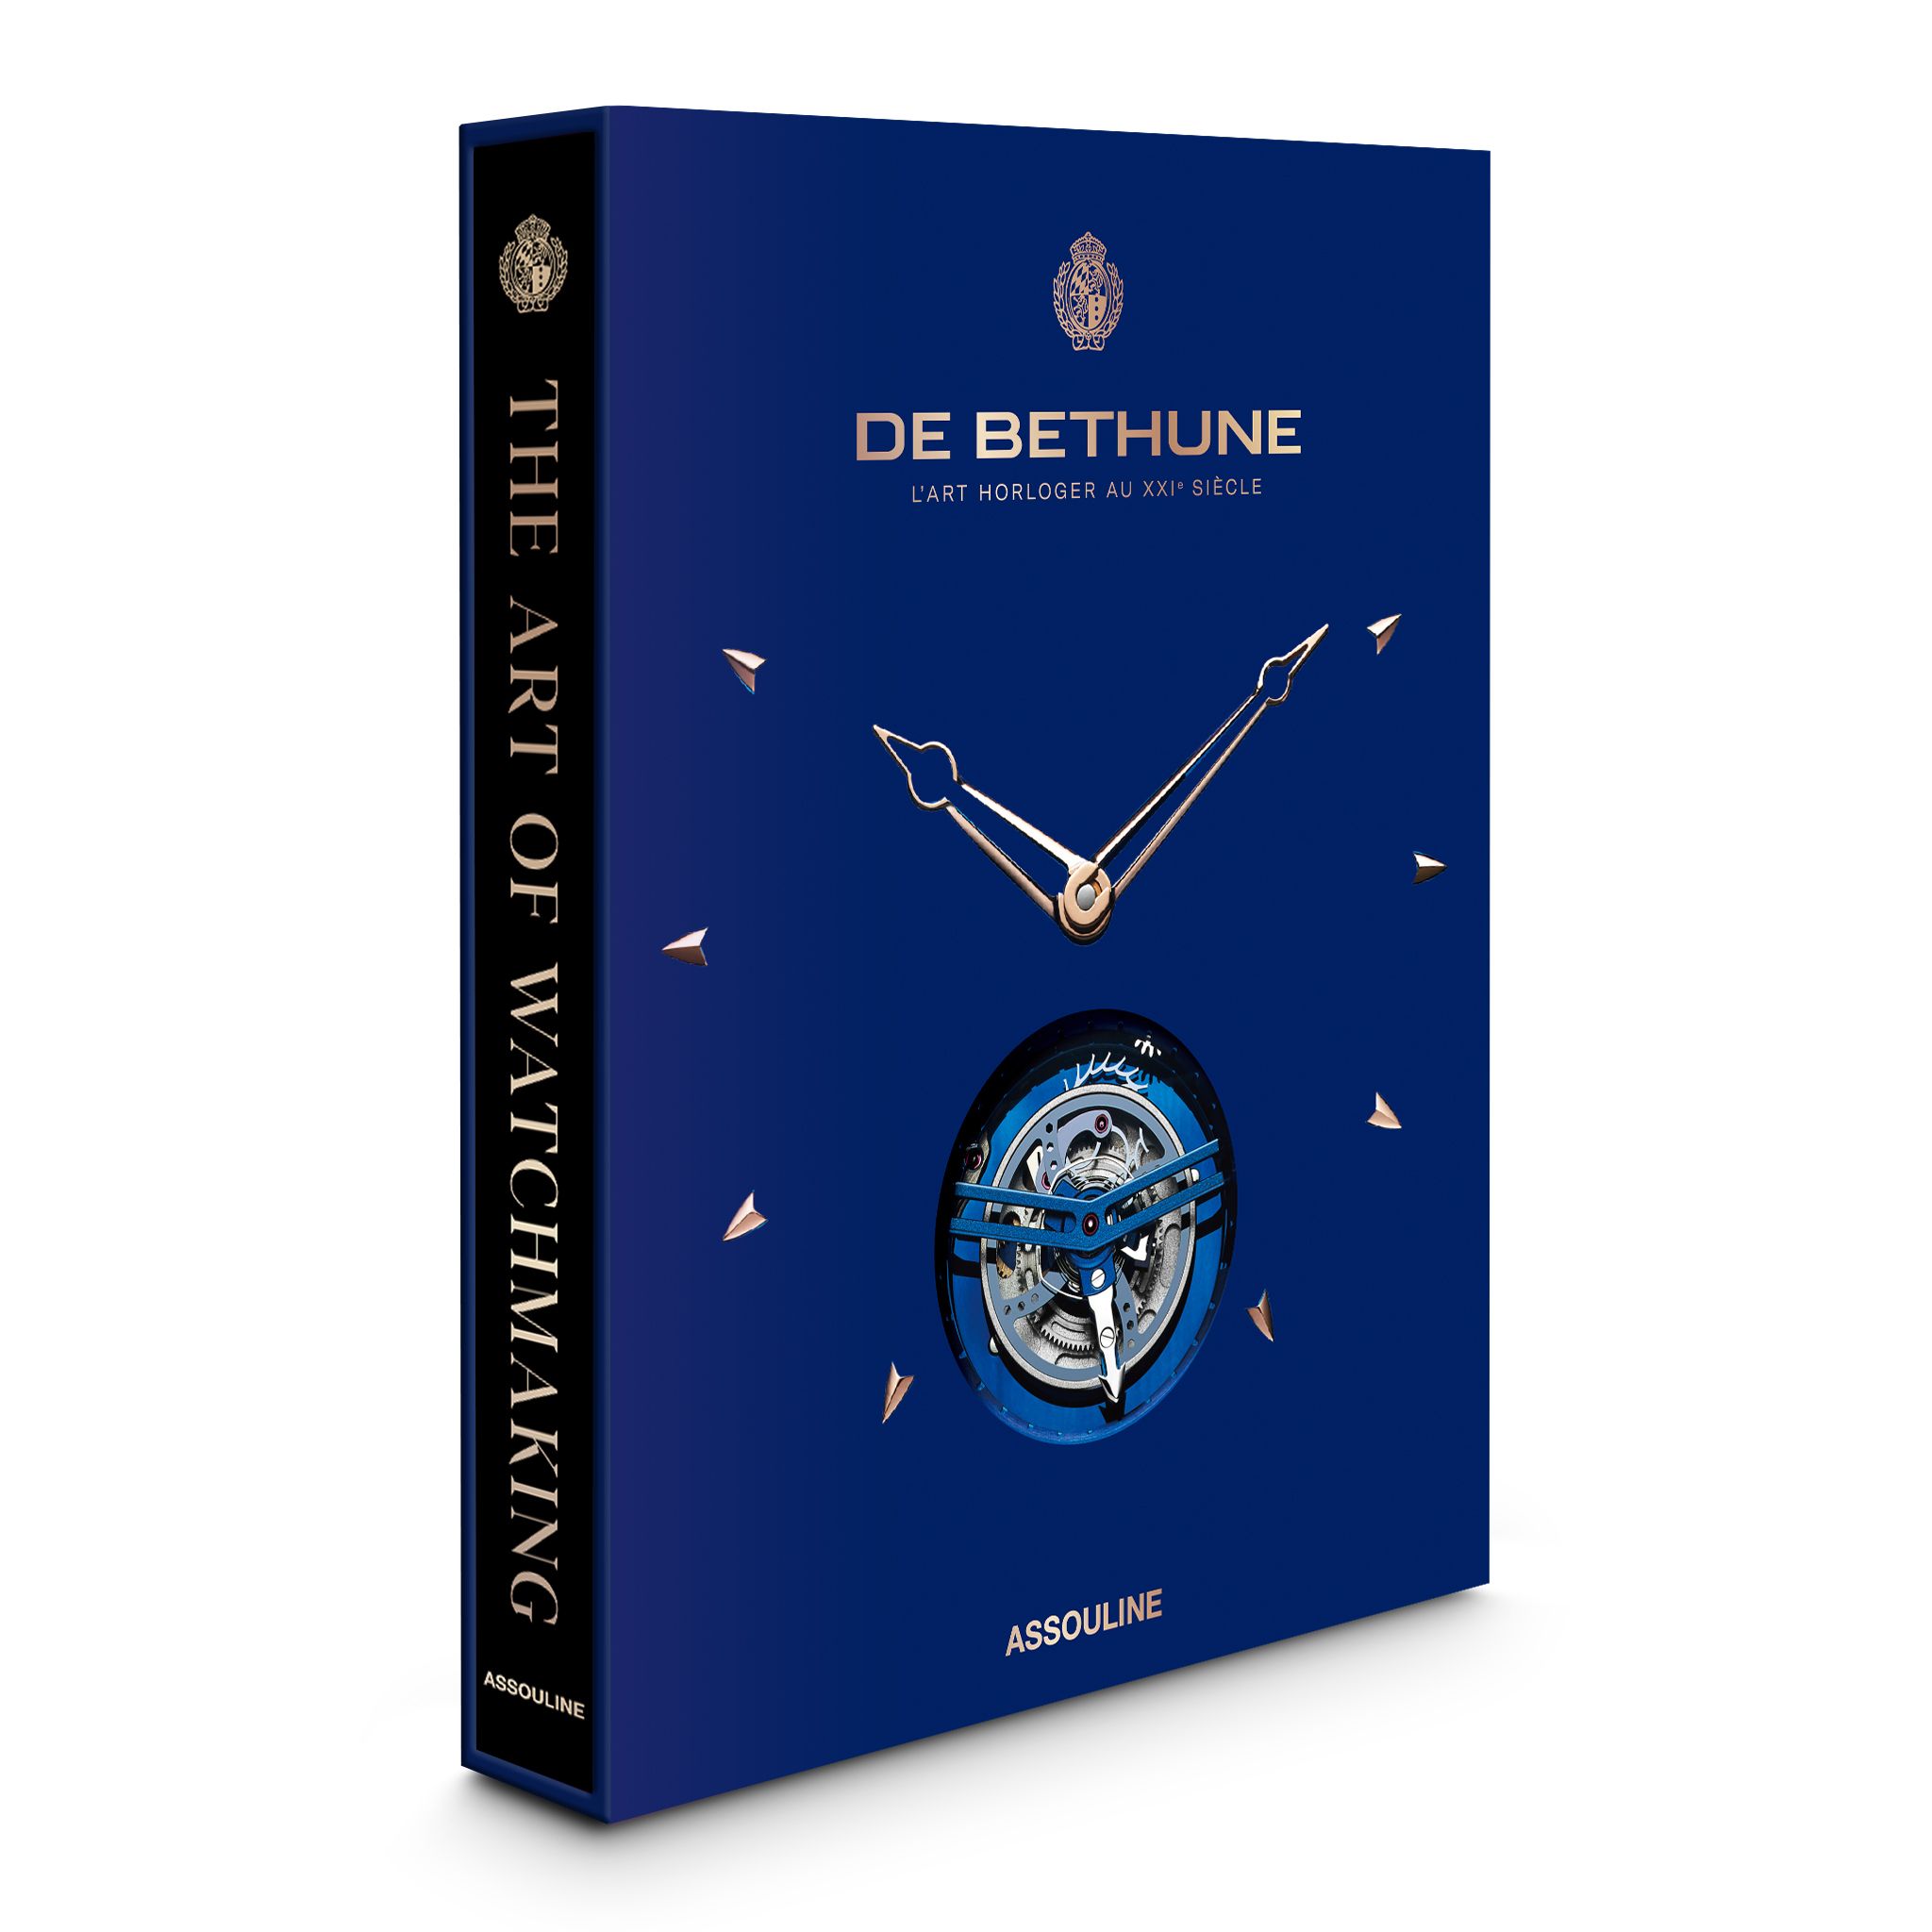 De Bethune: The Art of Watchmaking book.